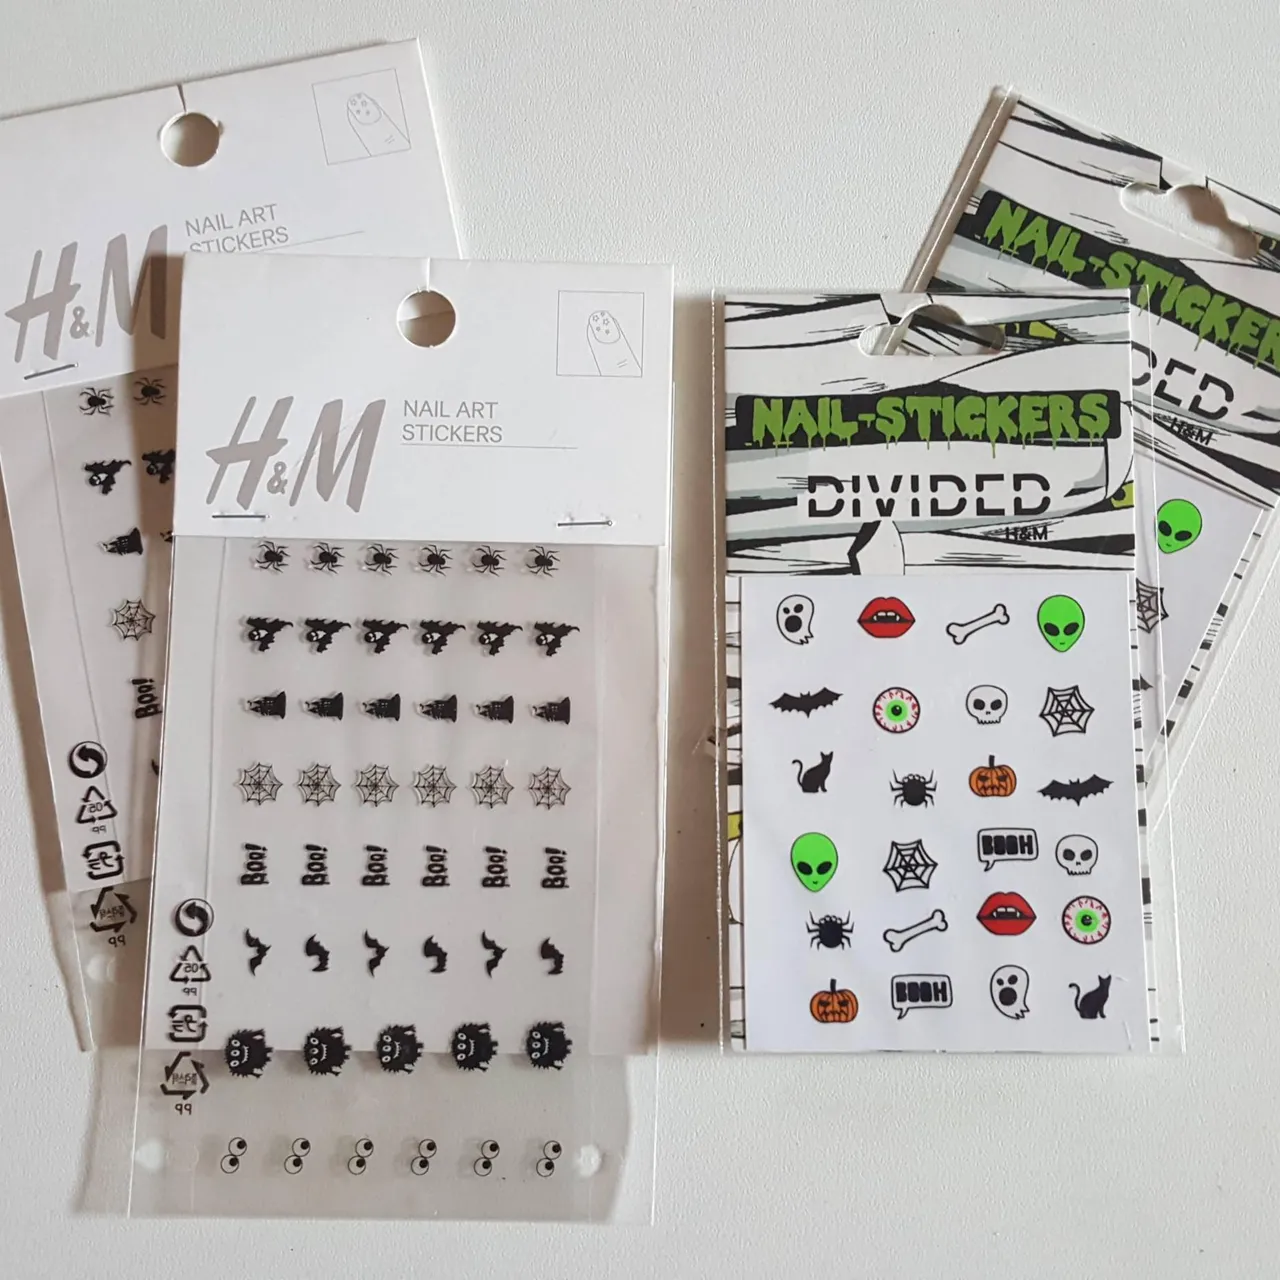 Halloween H&M nail stickers photo 1